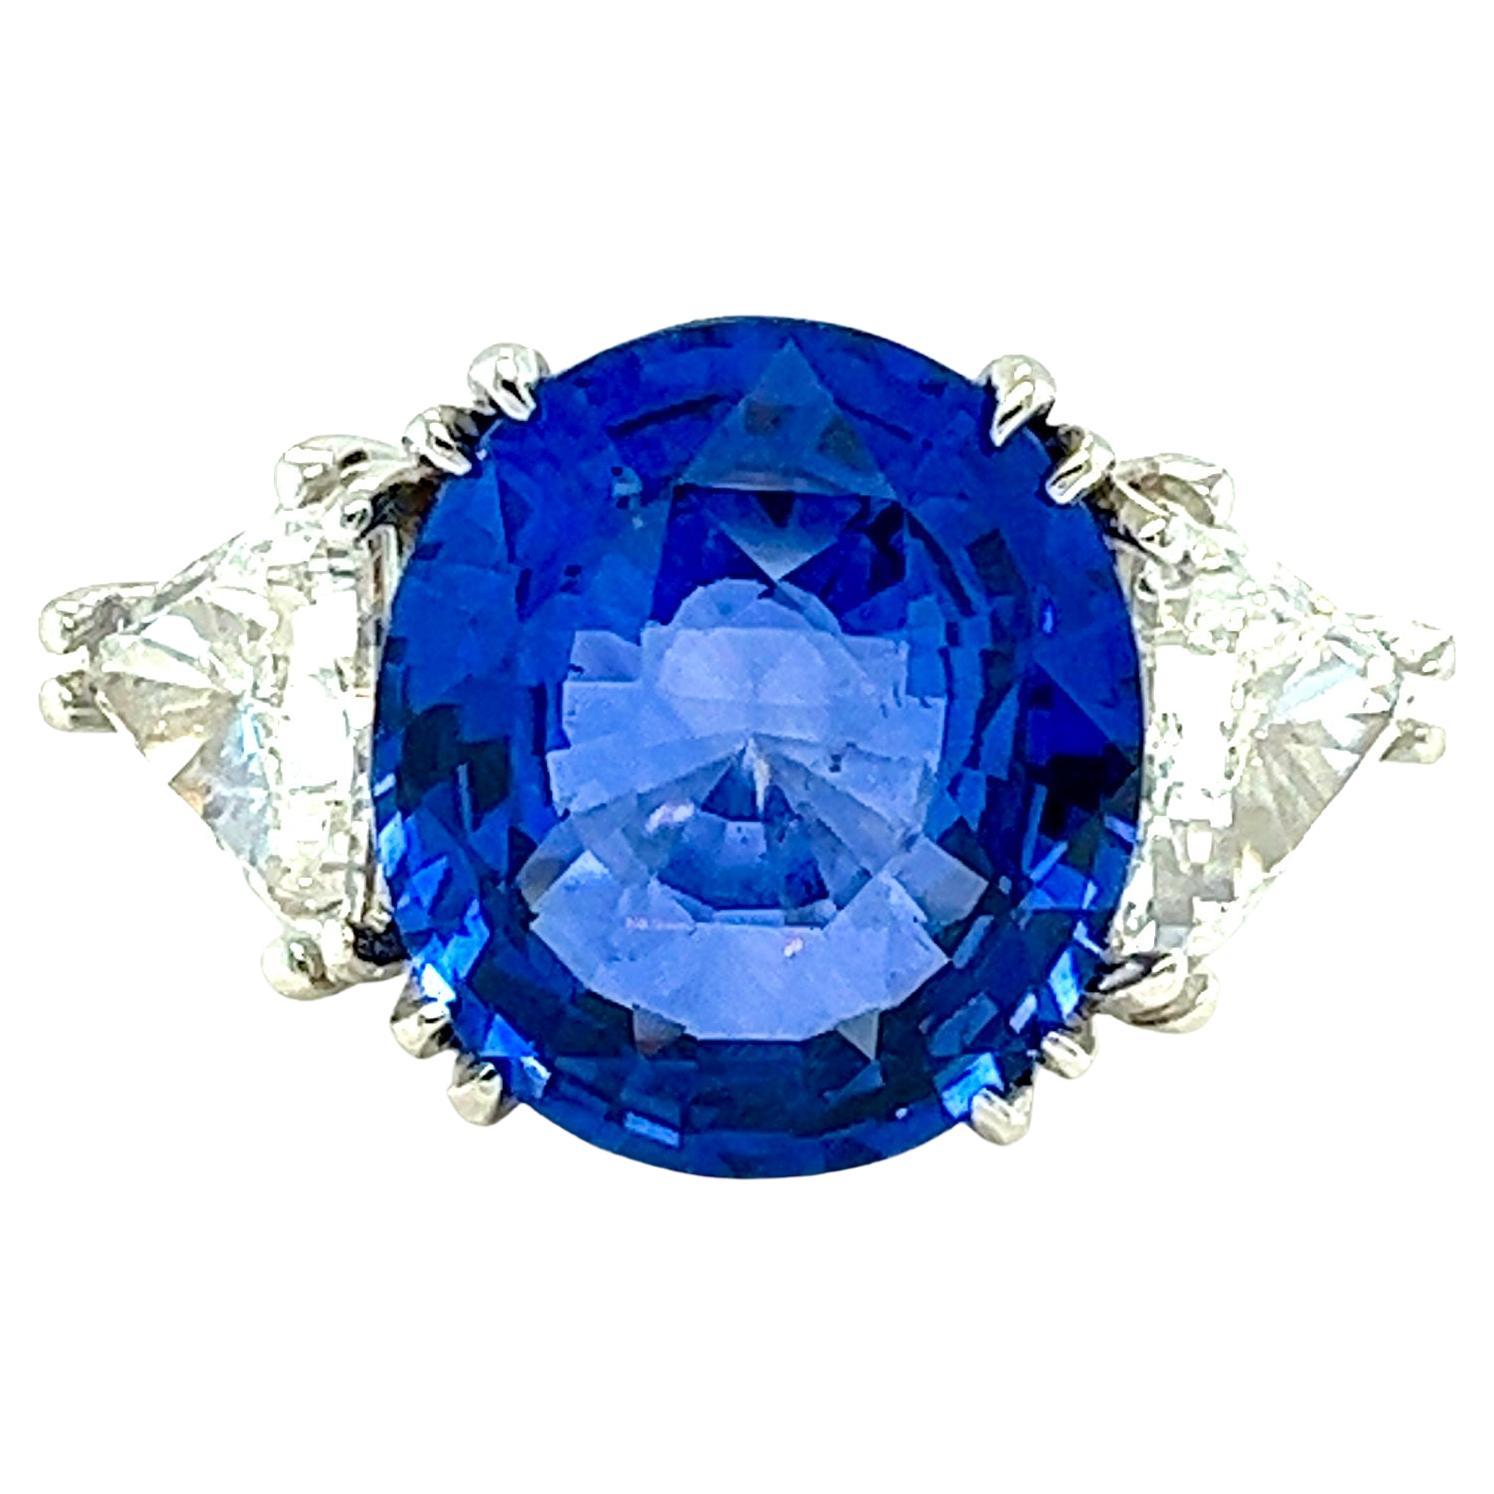 GIA Certified 14.64 Carat Blue Sapphire Diamond Ring